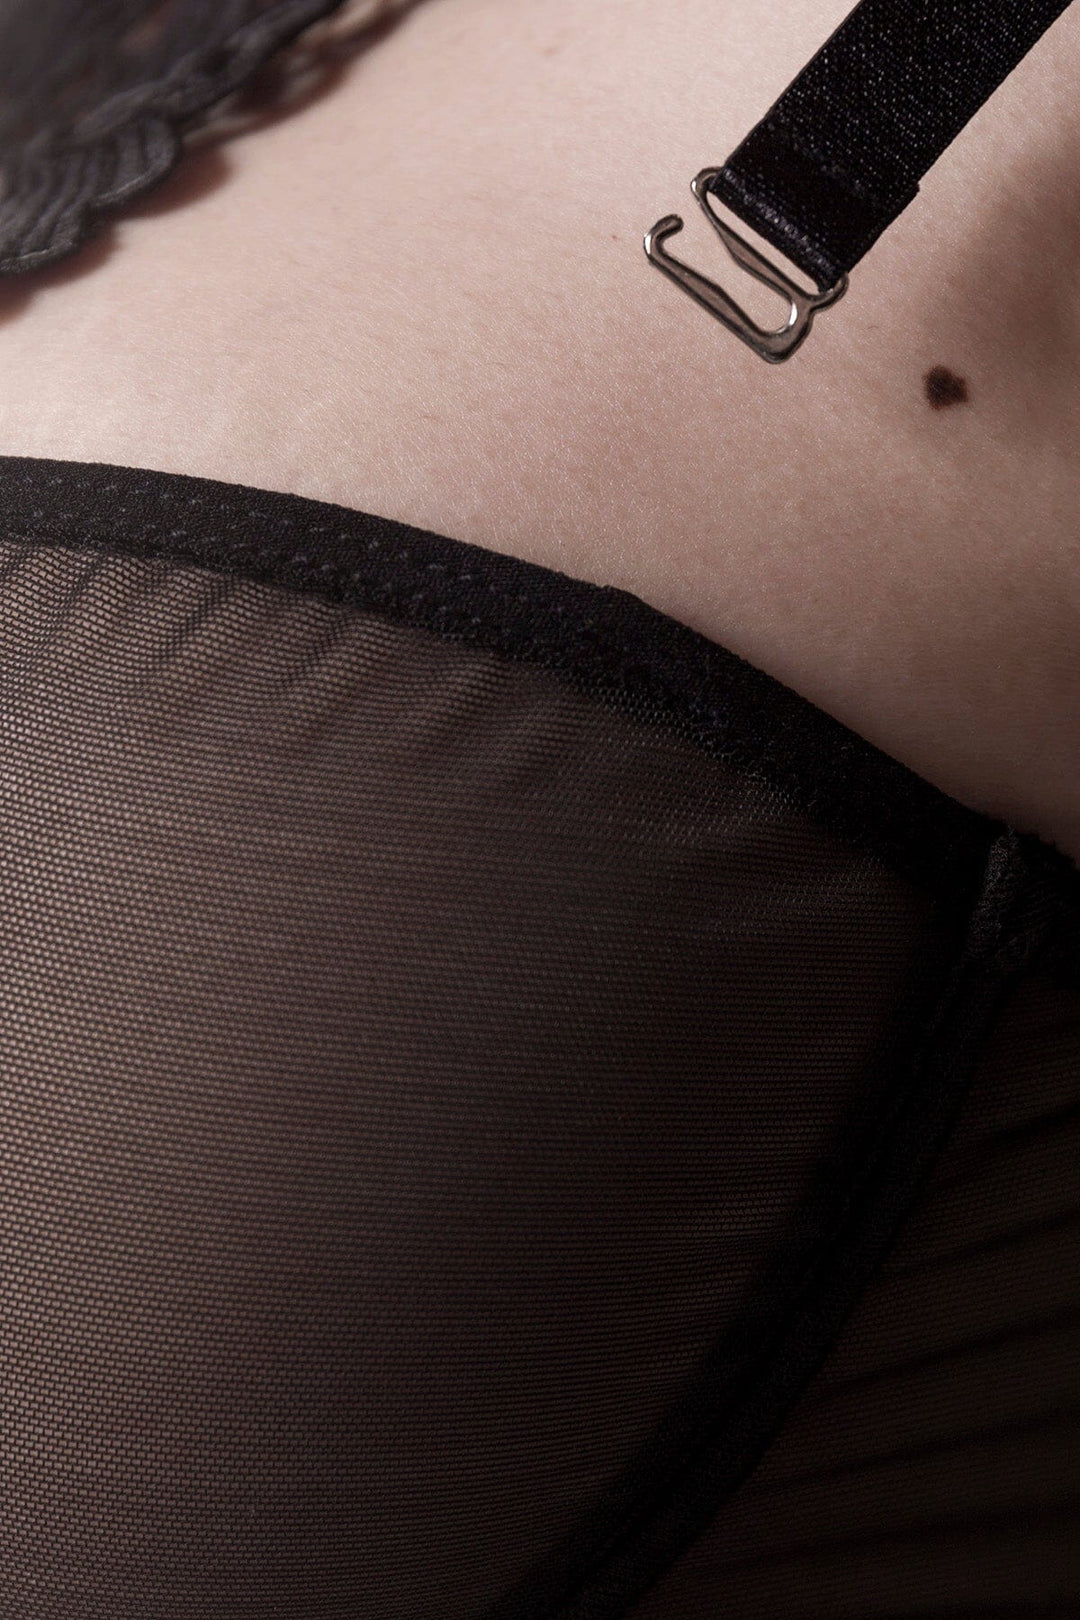 Transparent, Elastic Mesh Garter Set-Fetish Lingerie-Grey Velvet-SEXYSHOES.COM